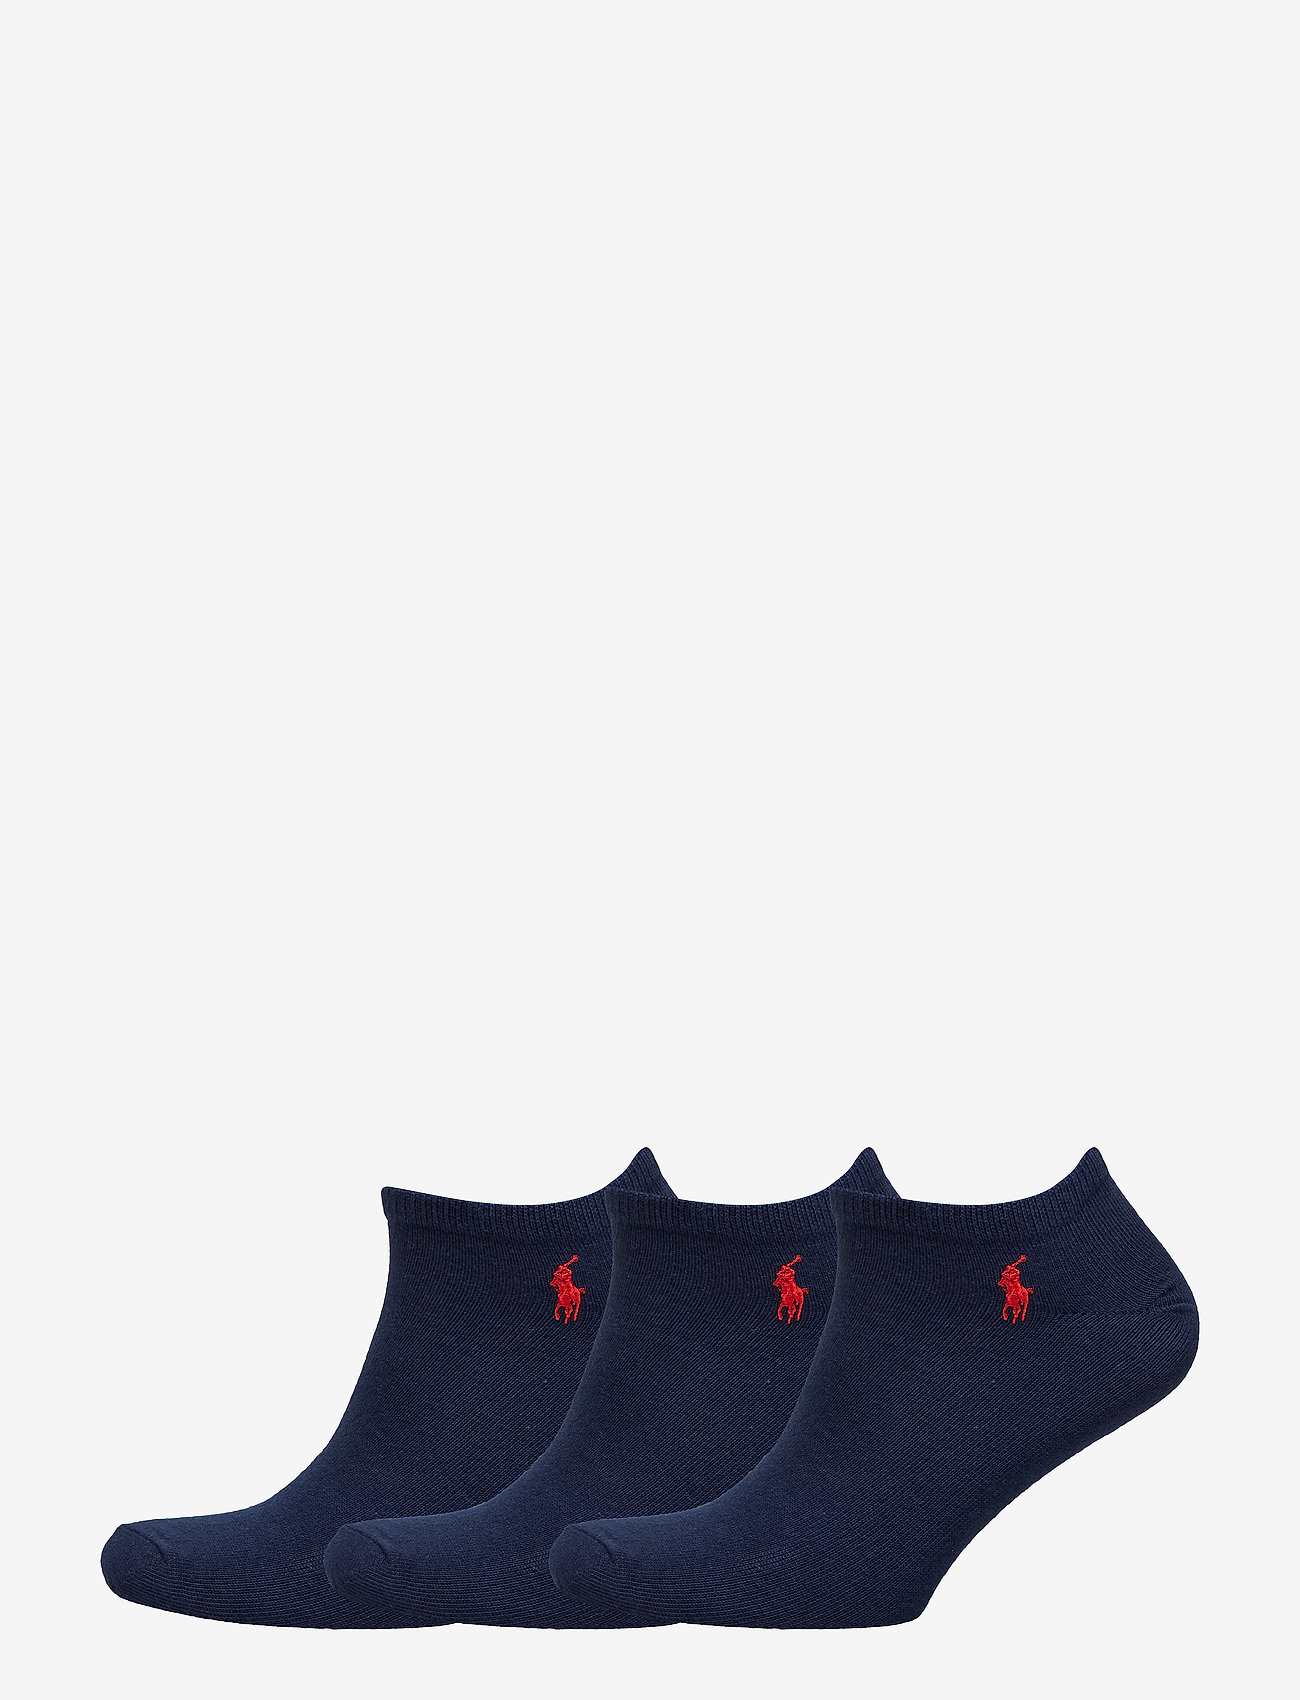 Polo Ralph Lauren Underwear - Low-Cut Cotton Sock 3-Pack - multipack strumpor - navy - 0